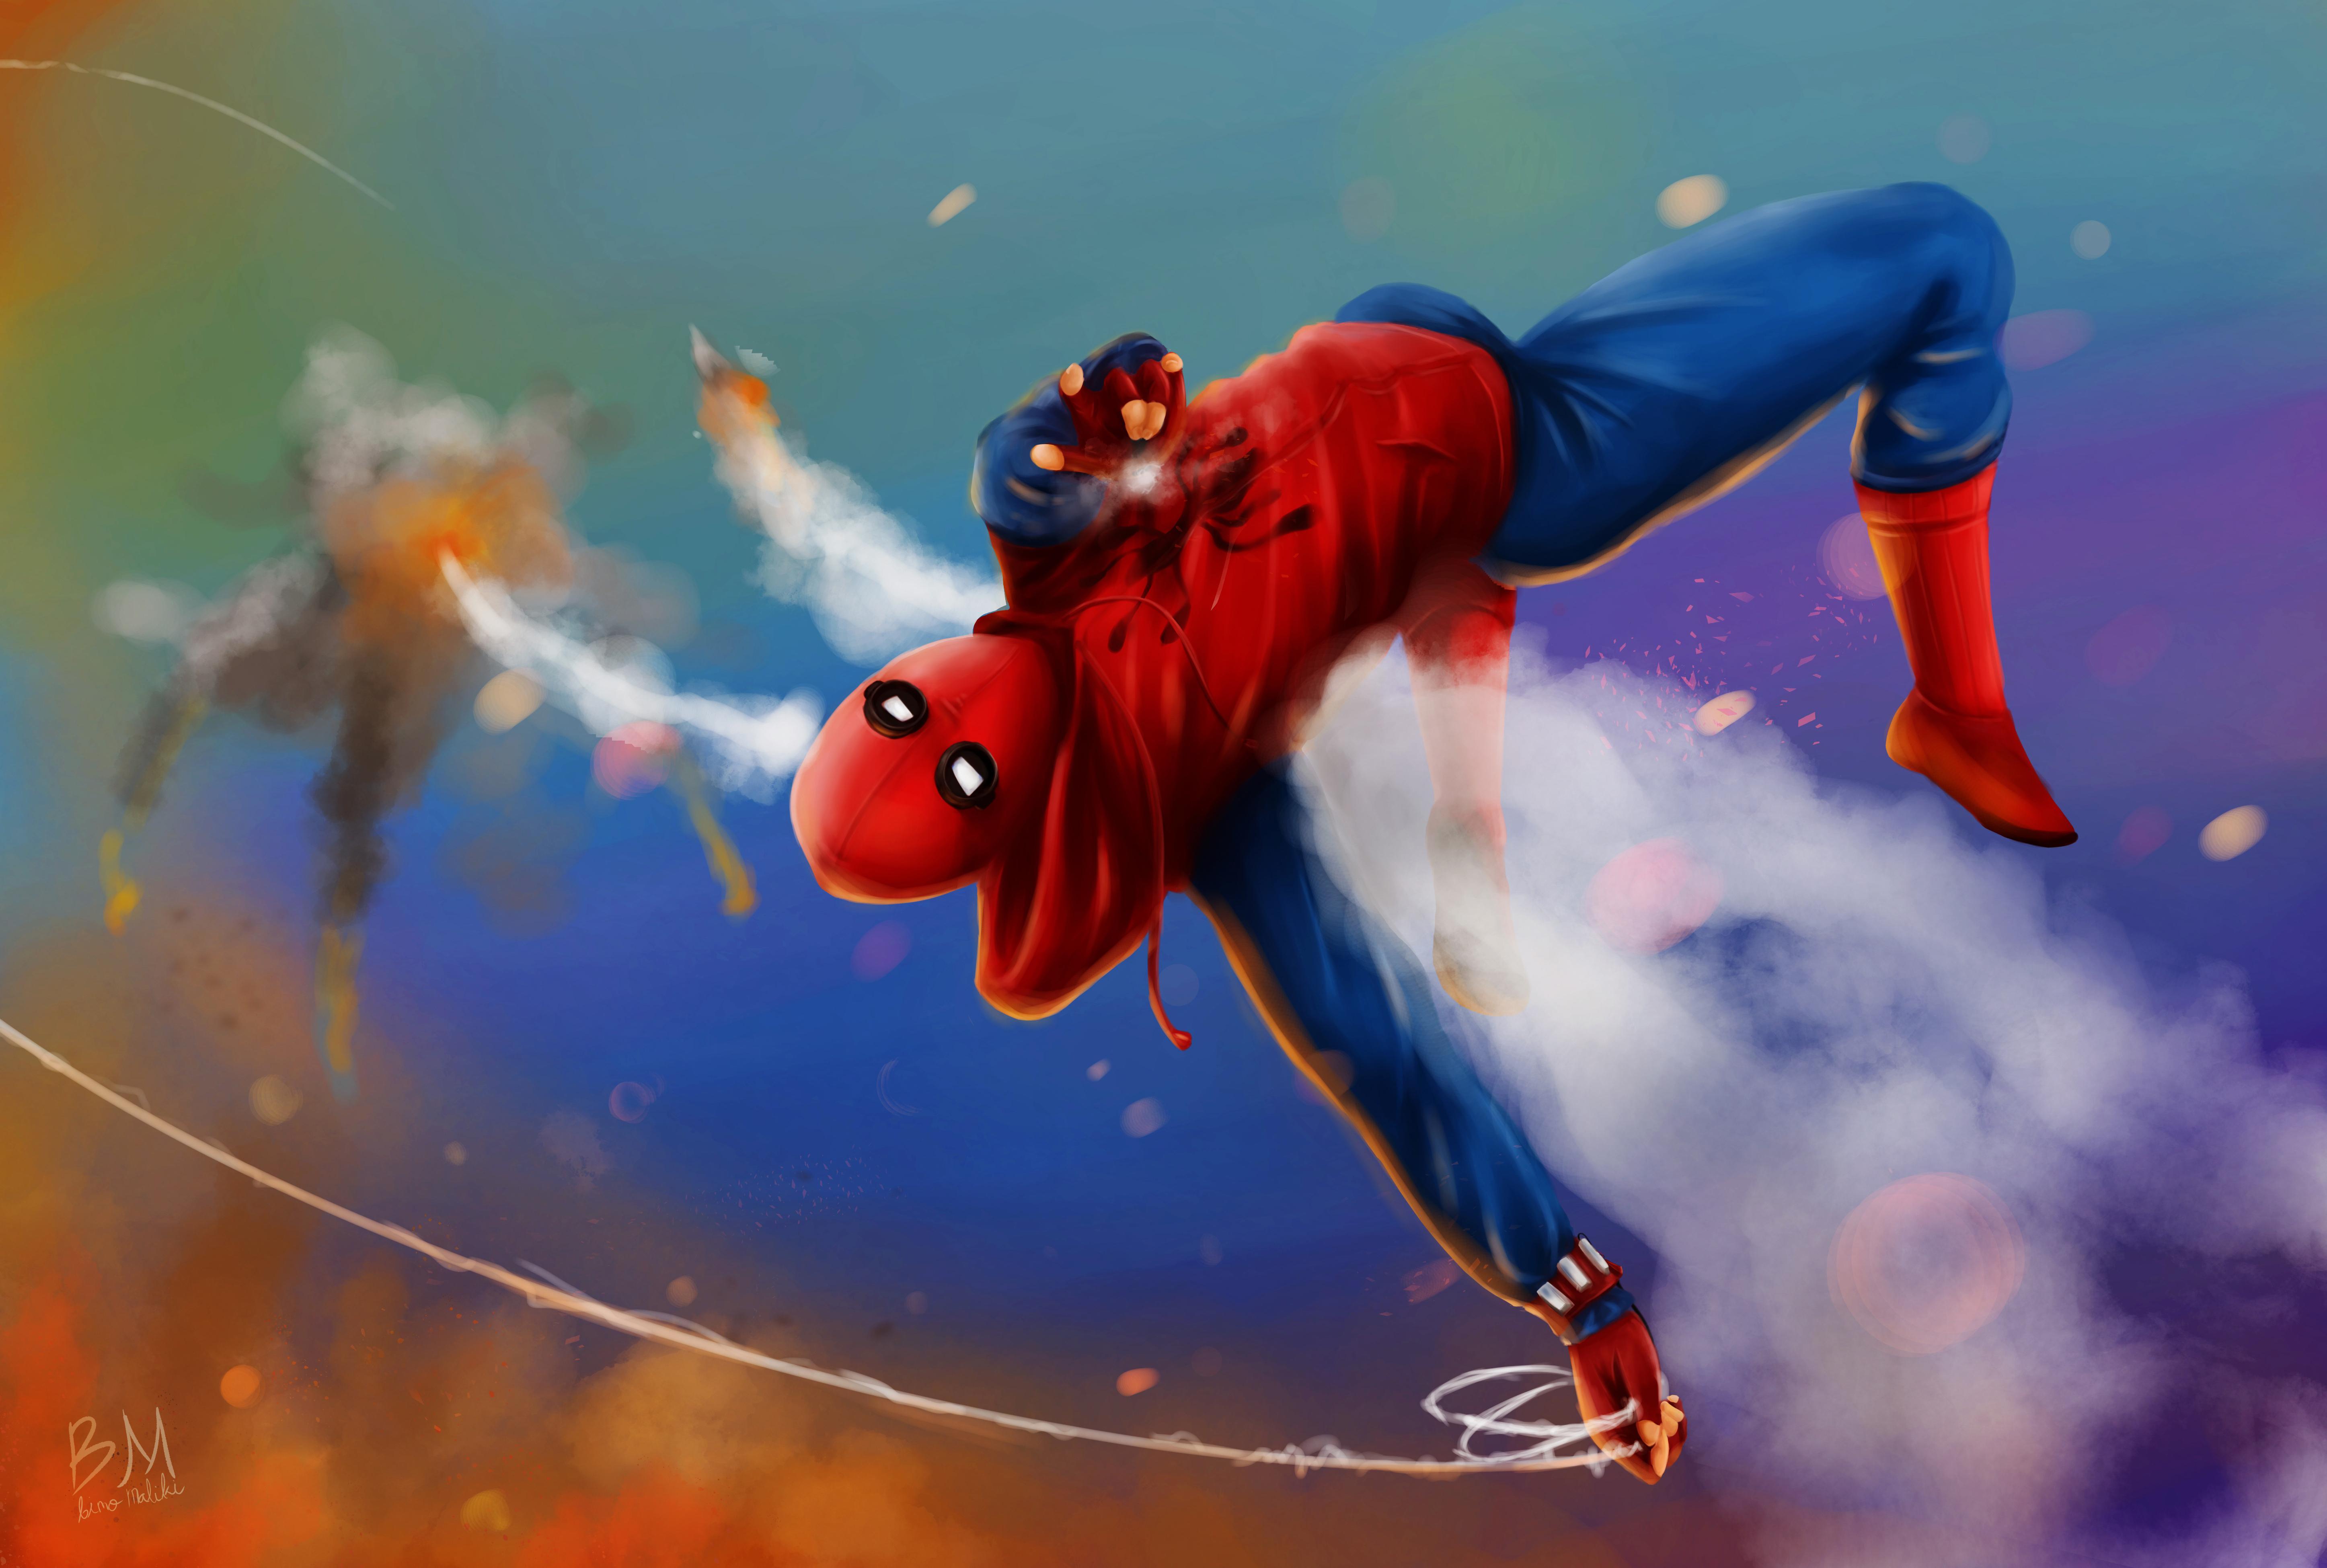 Spider Man Homemade Suit In Action, HD Superheroes, 4k Wallpaper